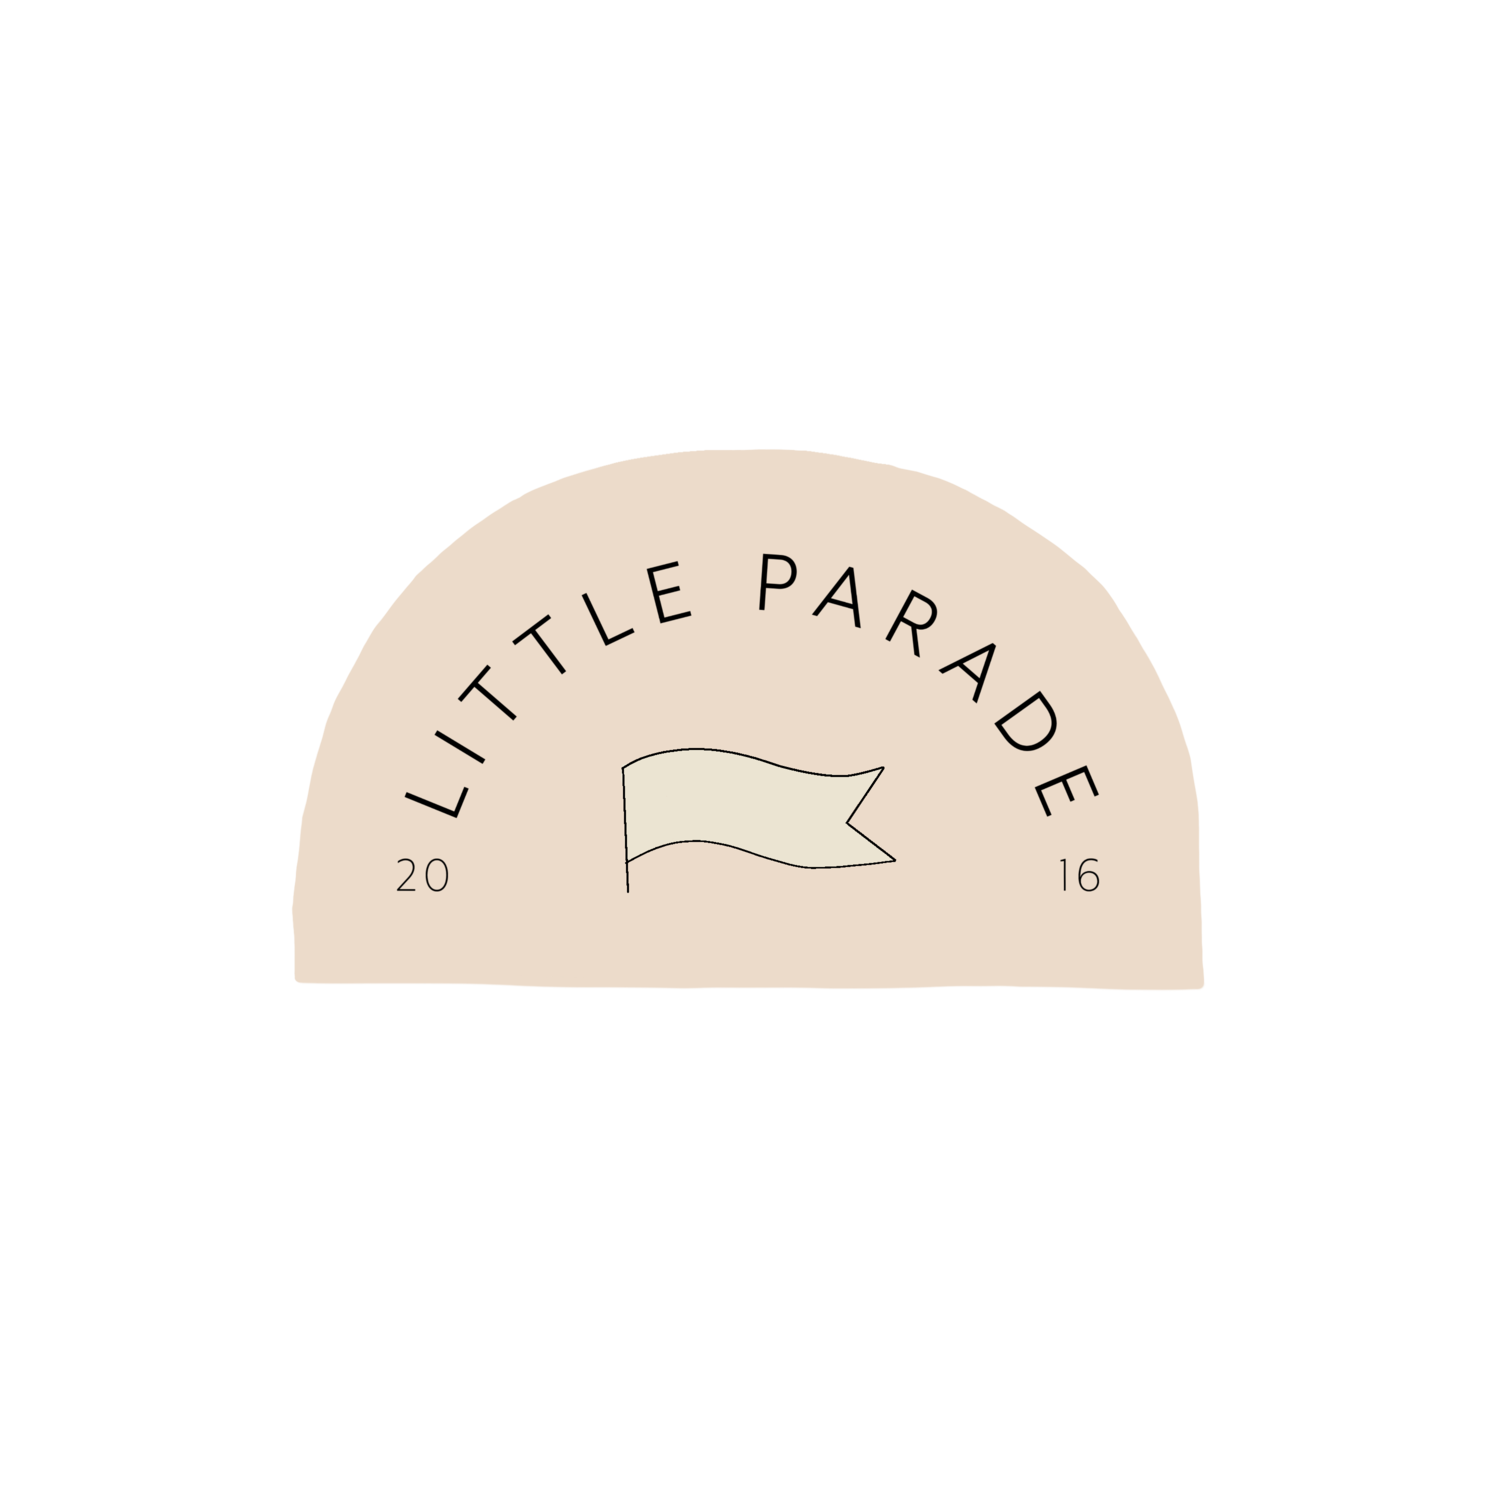 Little Parade